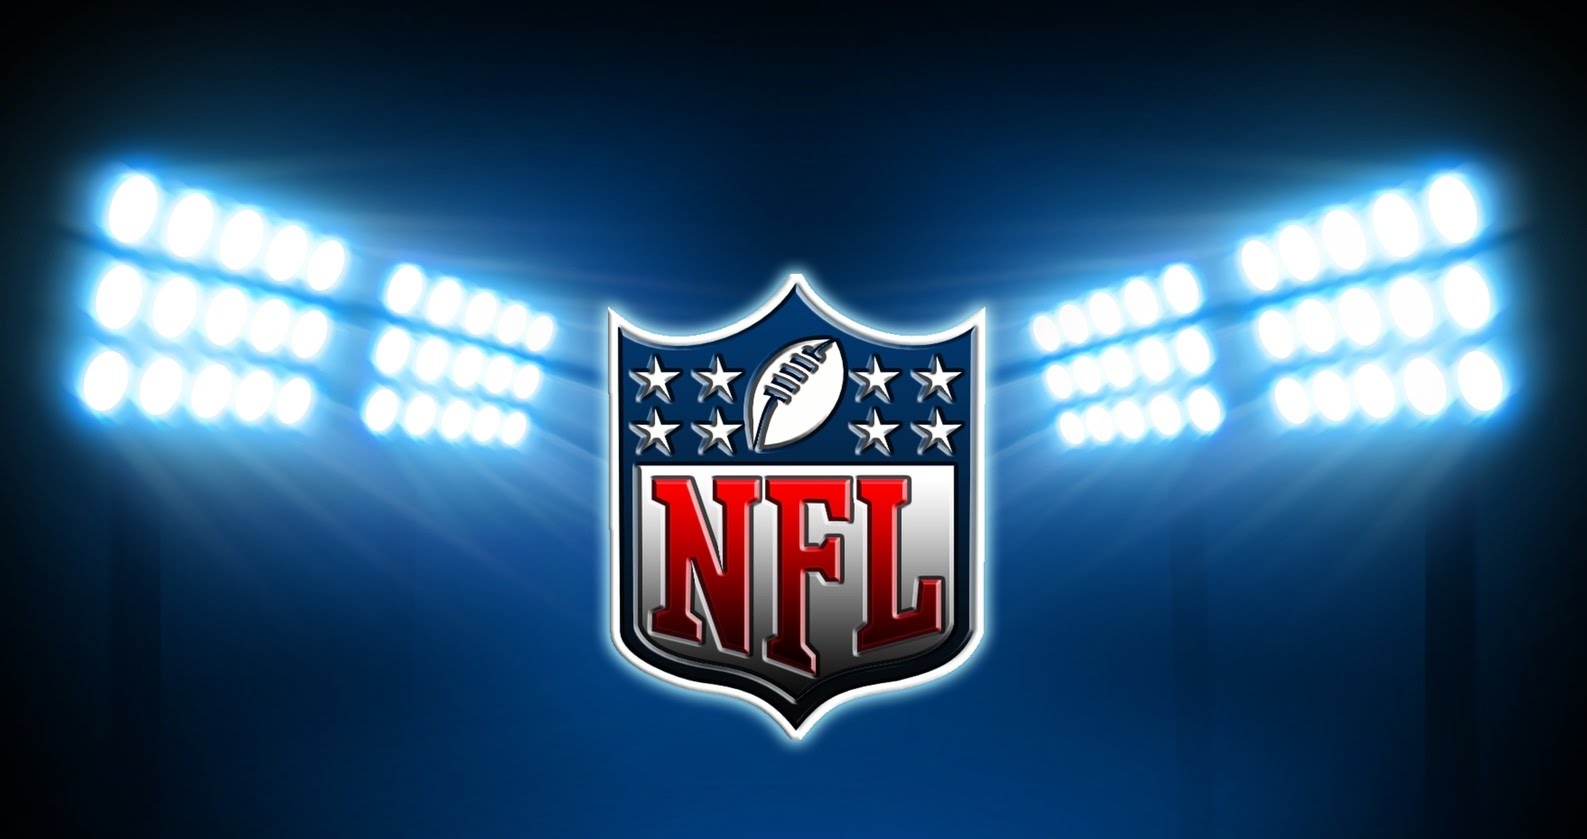 NFL SEASON HEADS INTO SECOND HALF ​(NFL.com release)